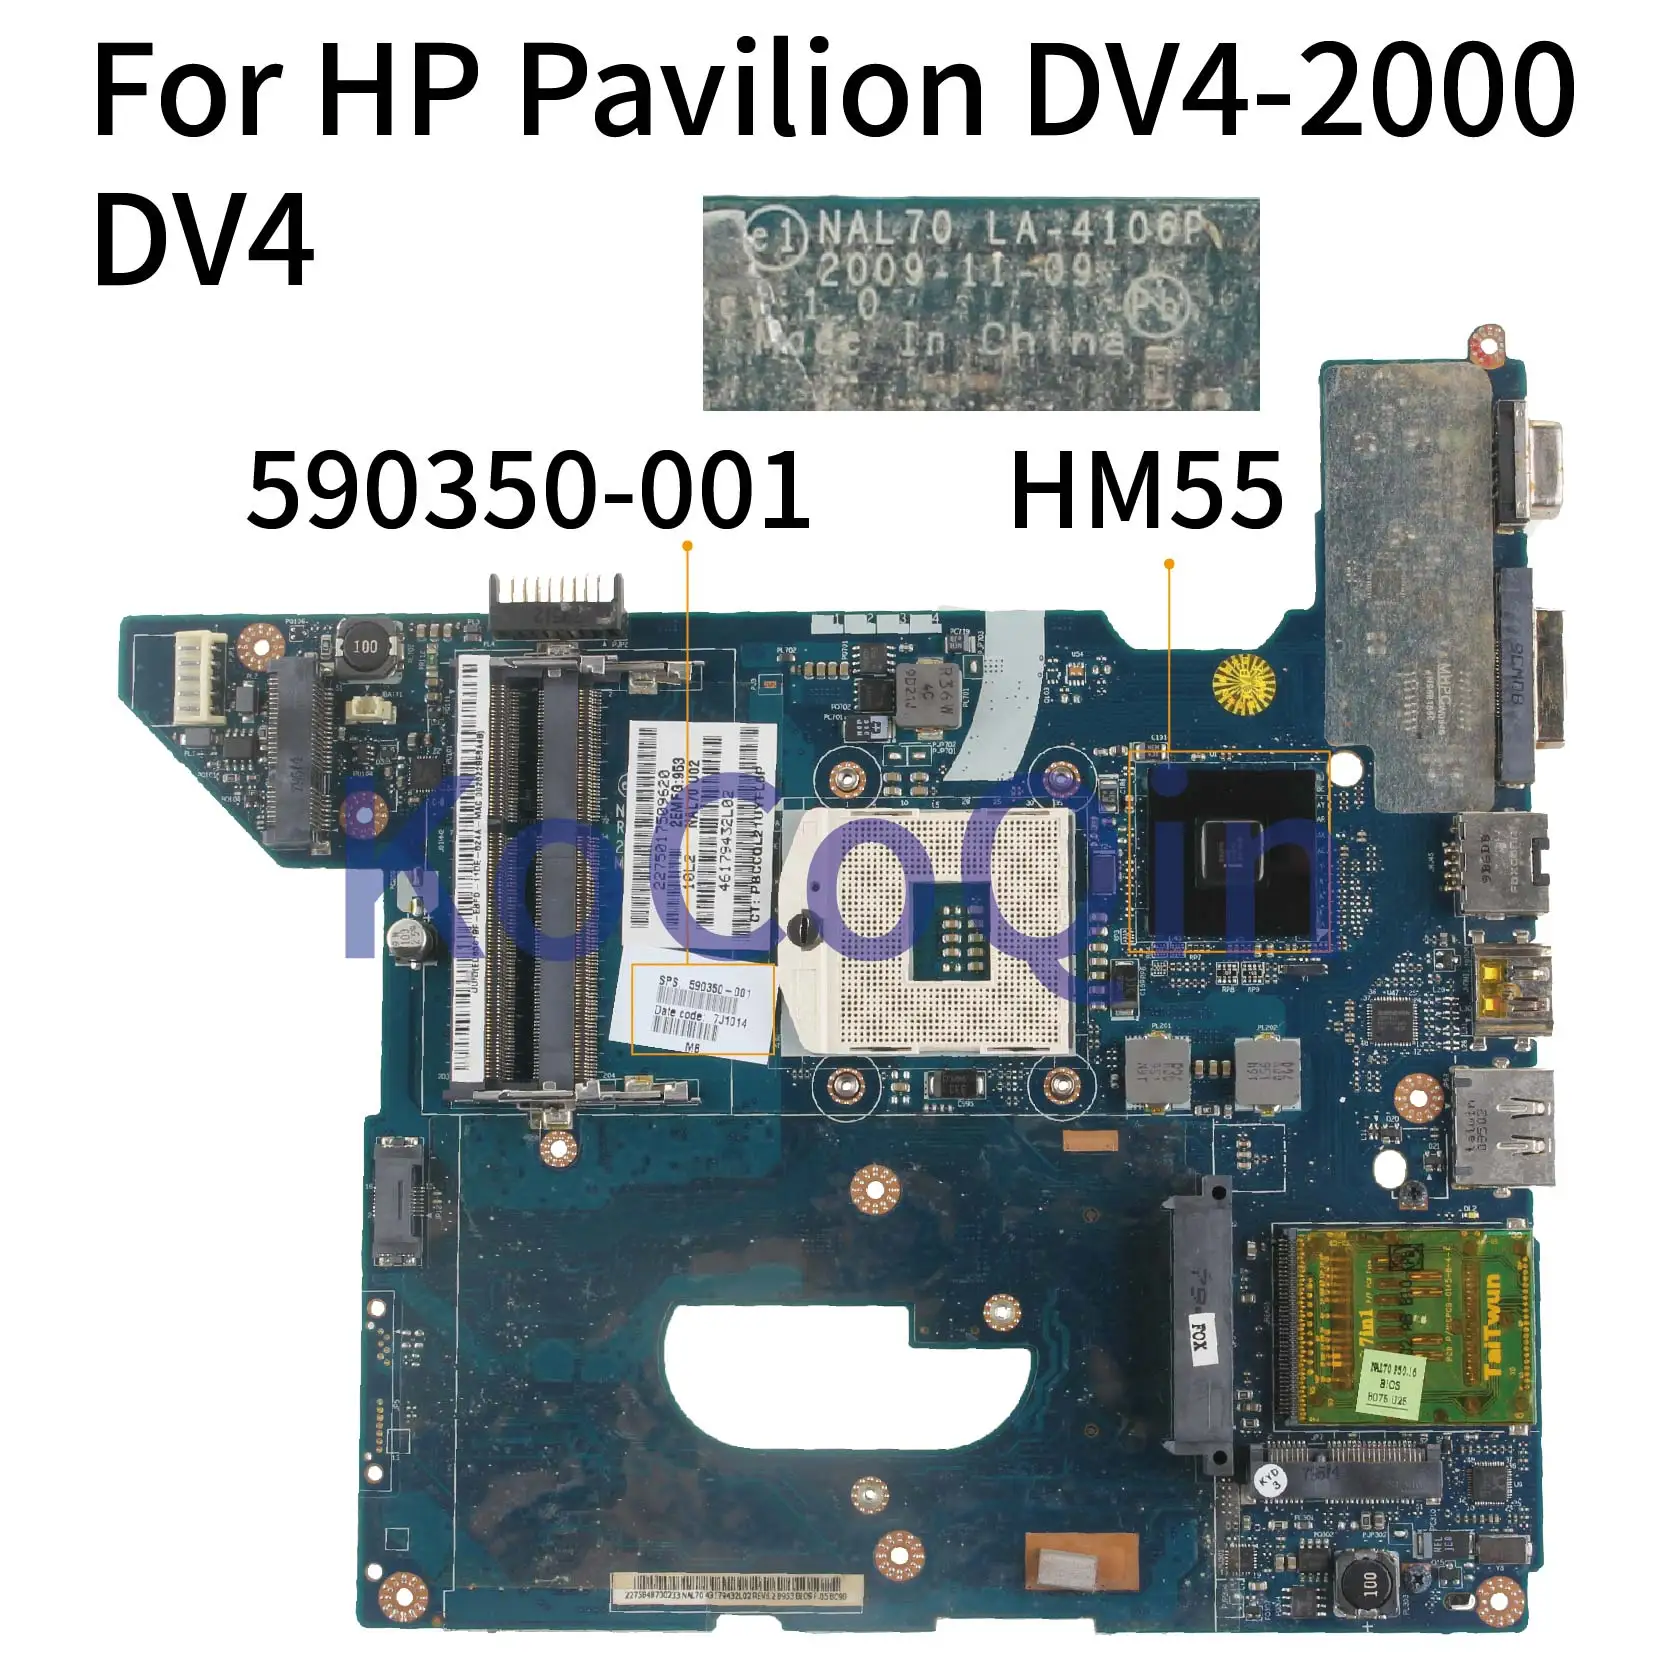 KoCoQin Laptop motherboard For HP Pavilion DV4-2000 DV4 Mainboard 590350-001 590350-501 NAL70 LA-4106P HM55